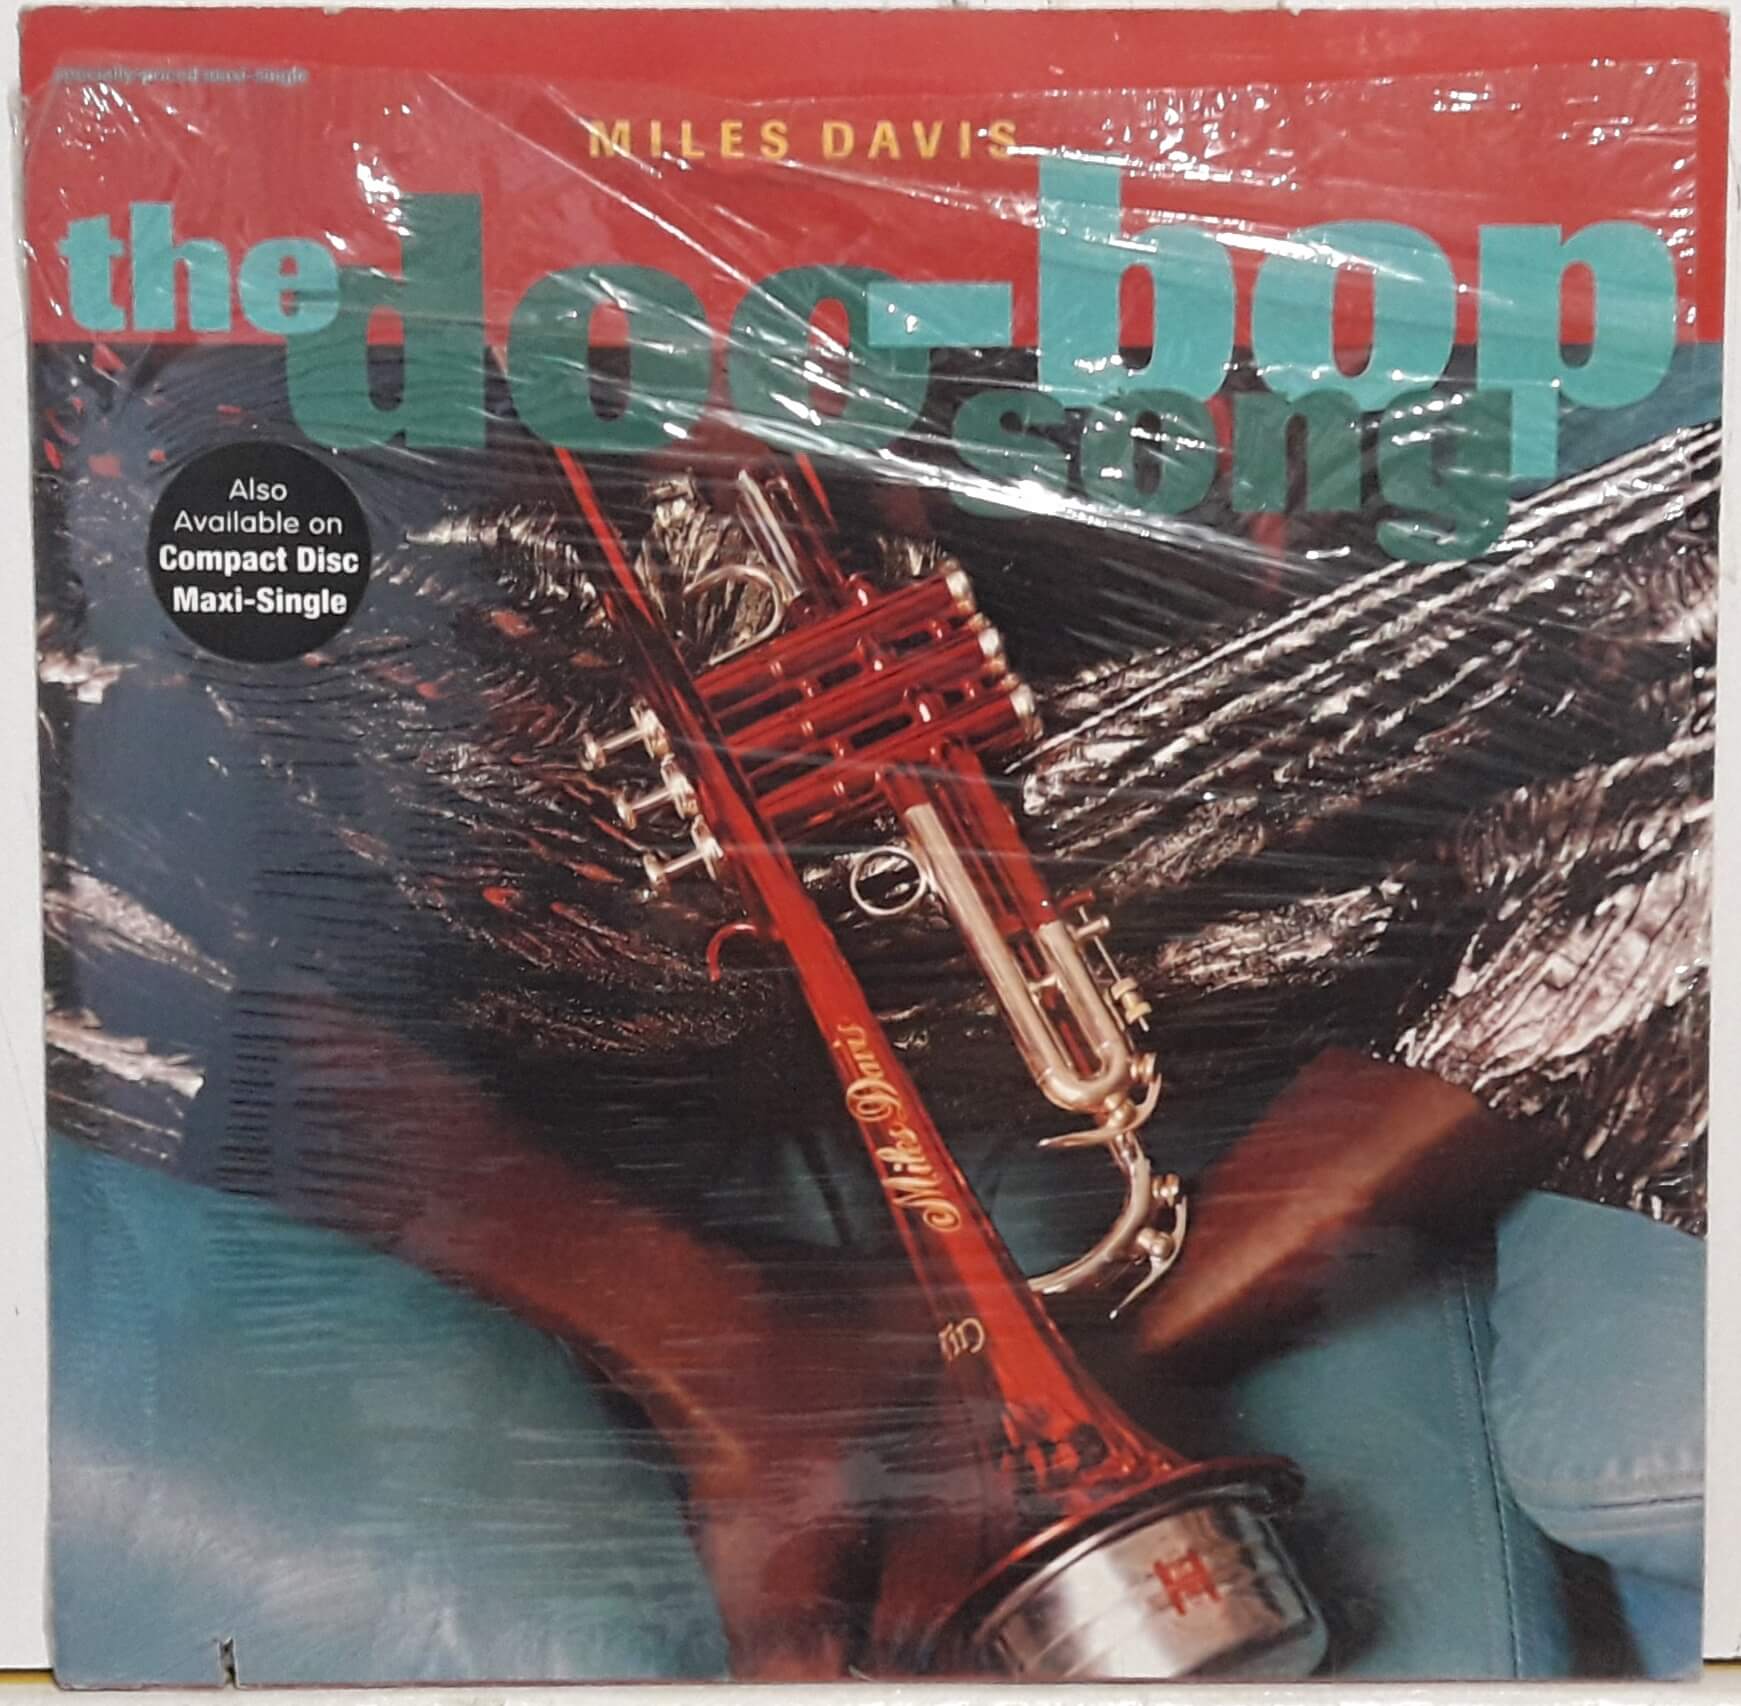 MILES DAVIS - THE DOO - BOP SONG - 1992 - WB - D vinil - Loja